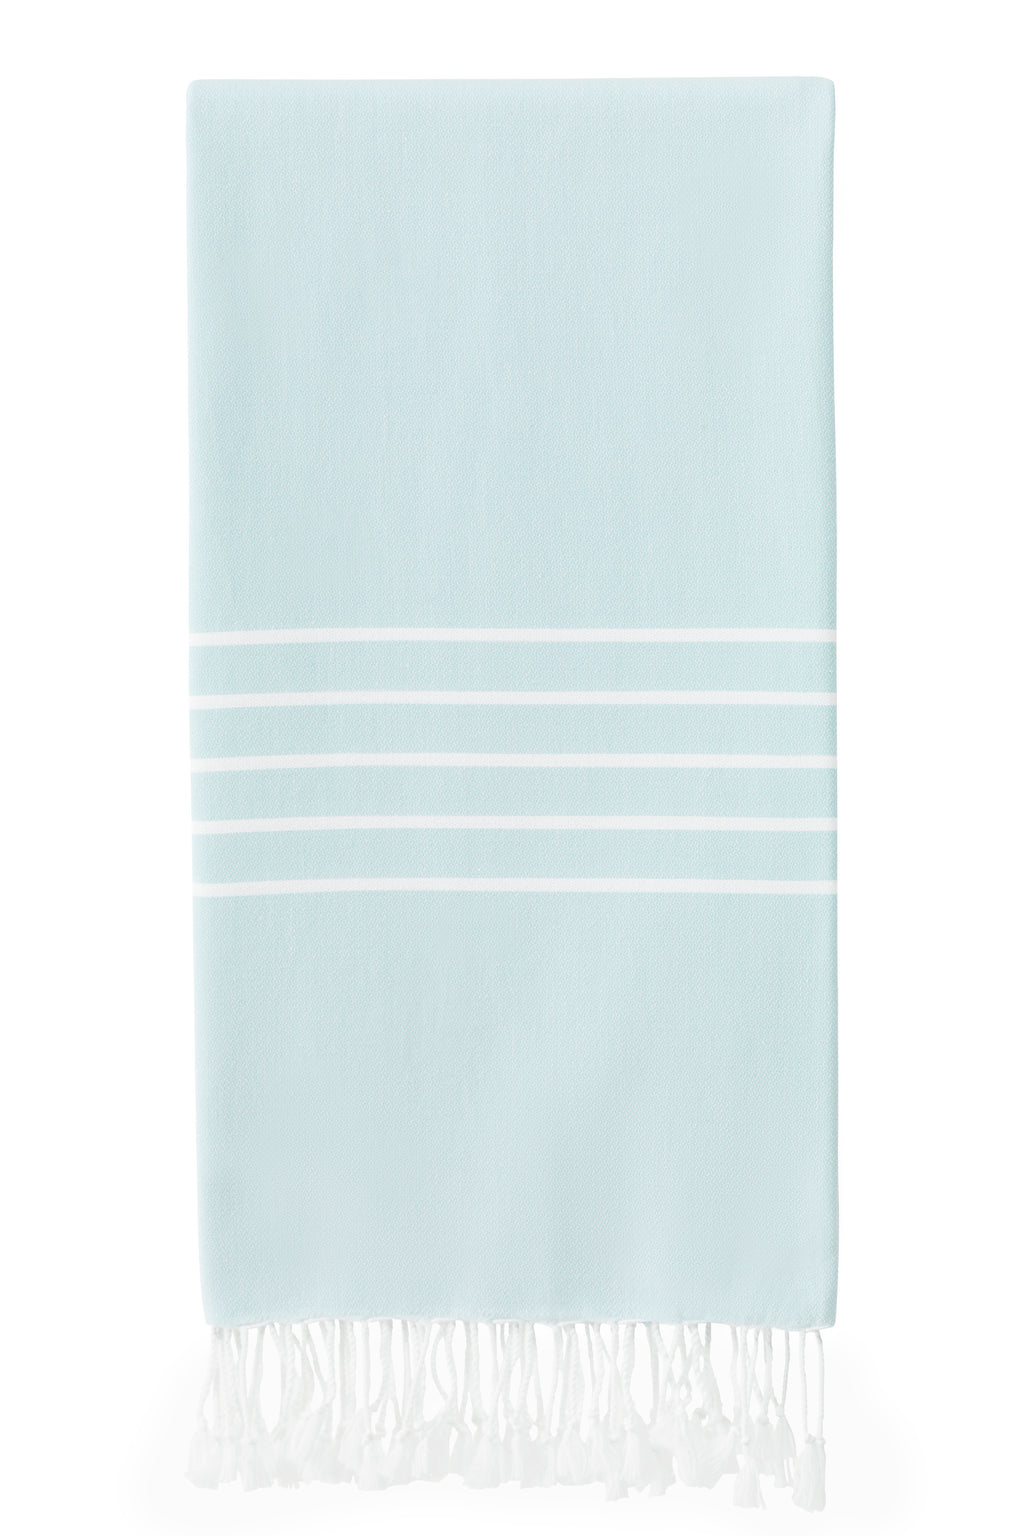 Lucy Turkish Towel - Aqua | Wetcat